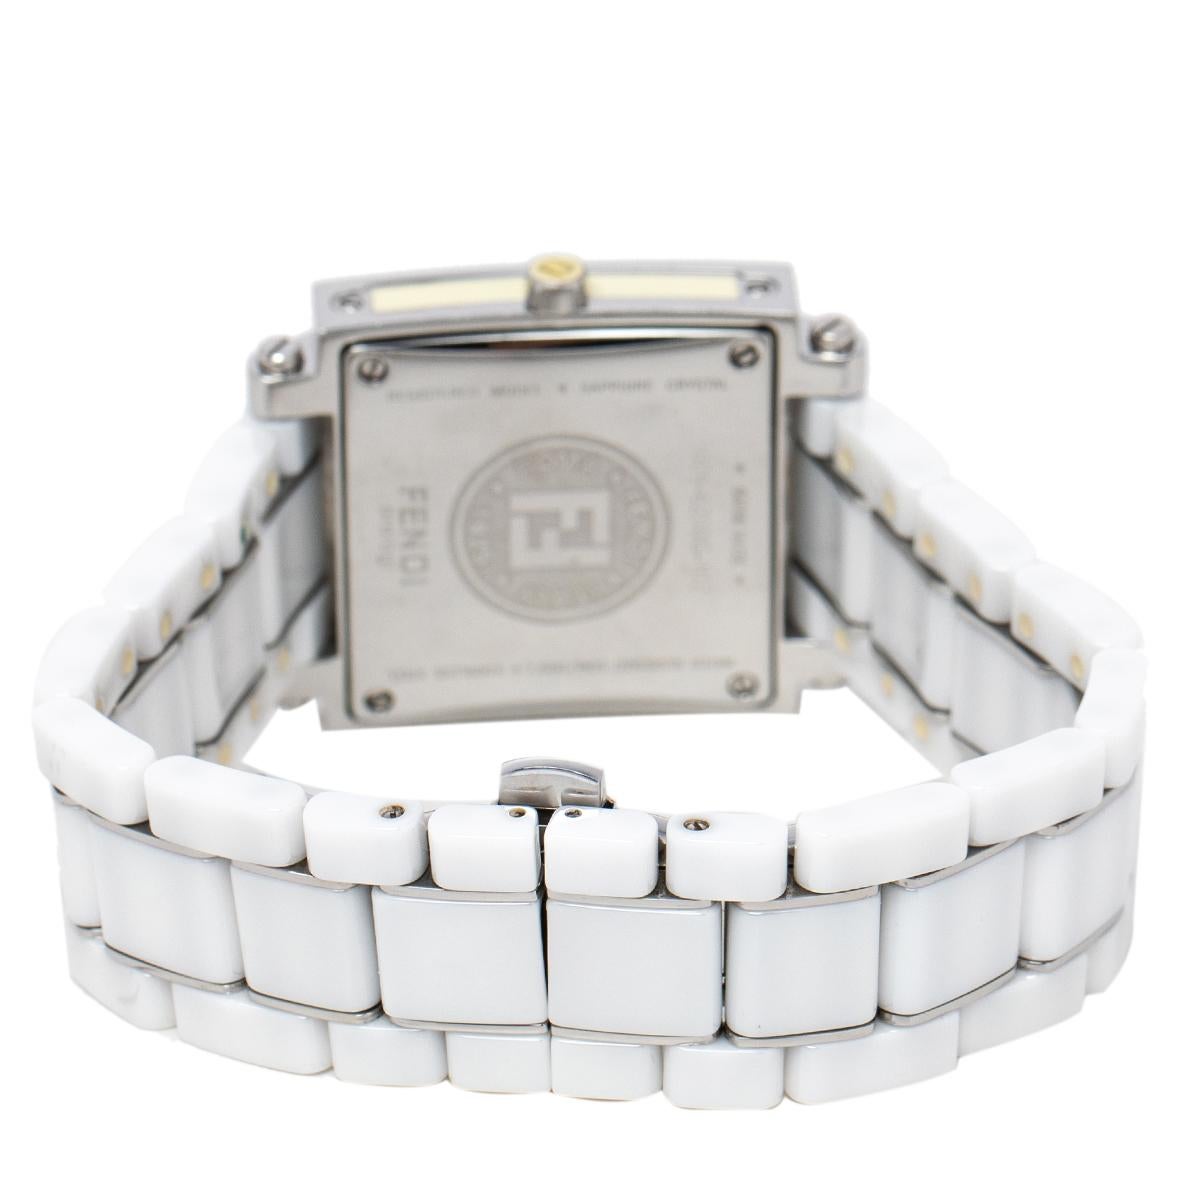 fendi women's watch with diamonds